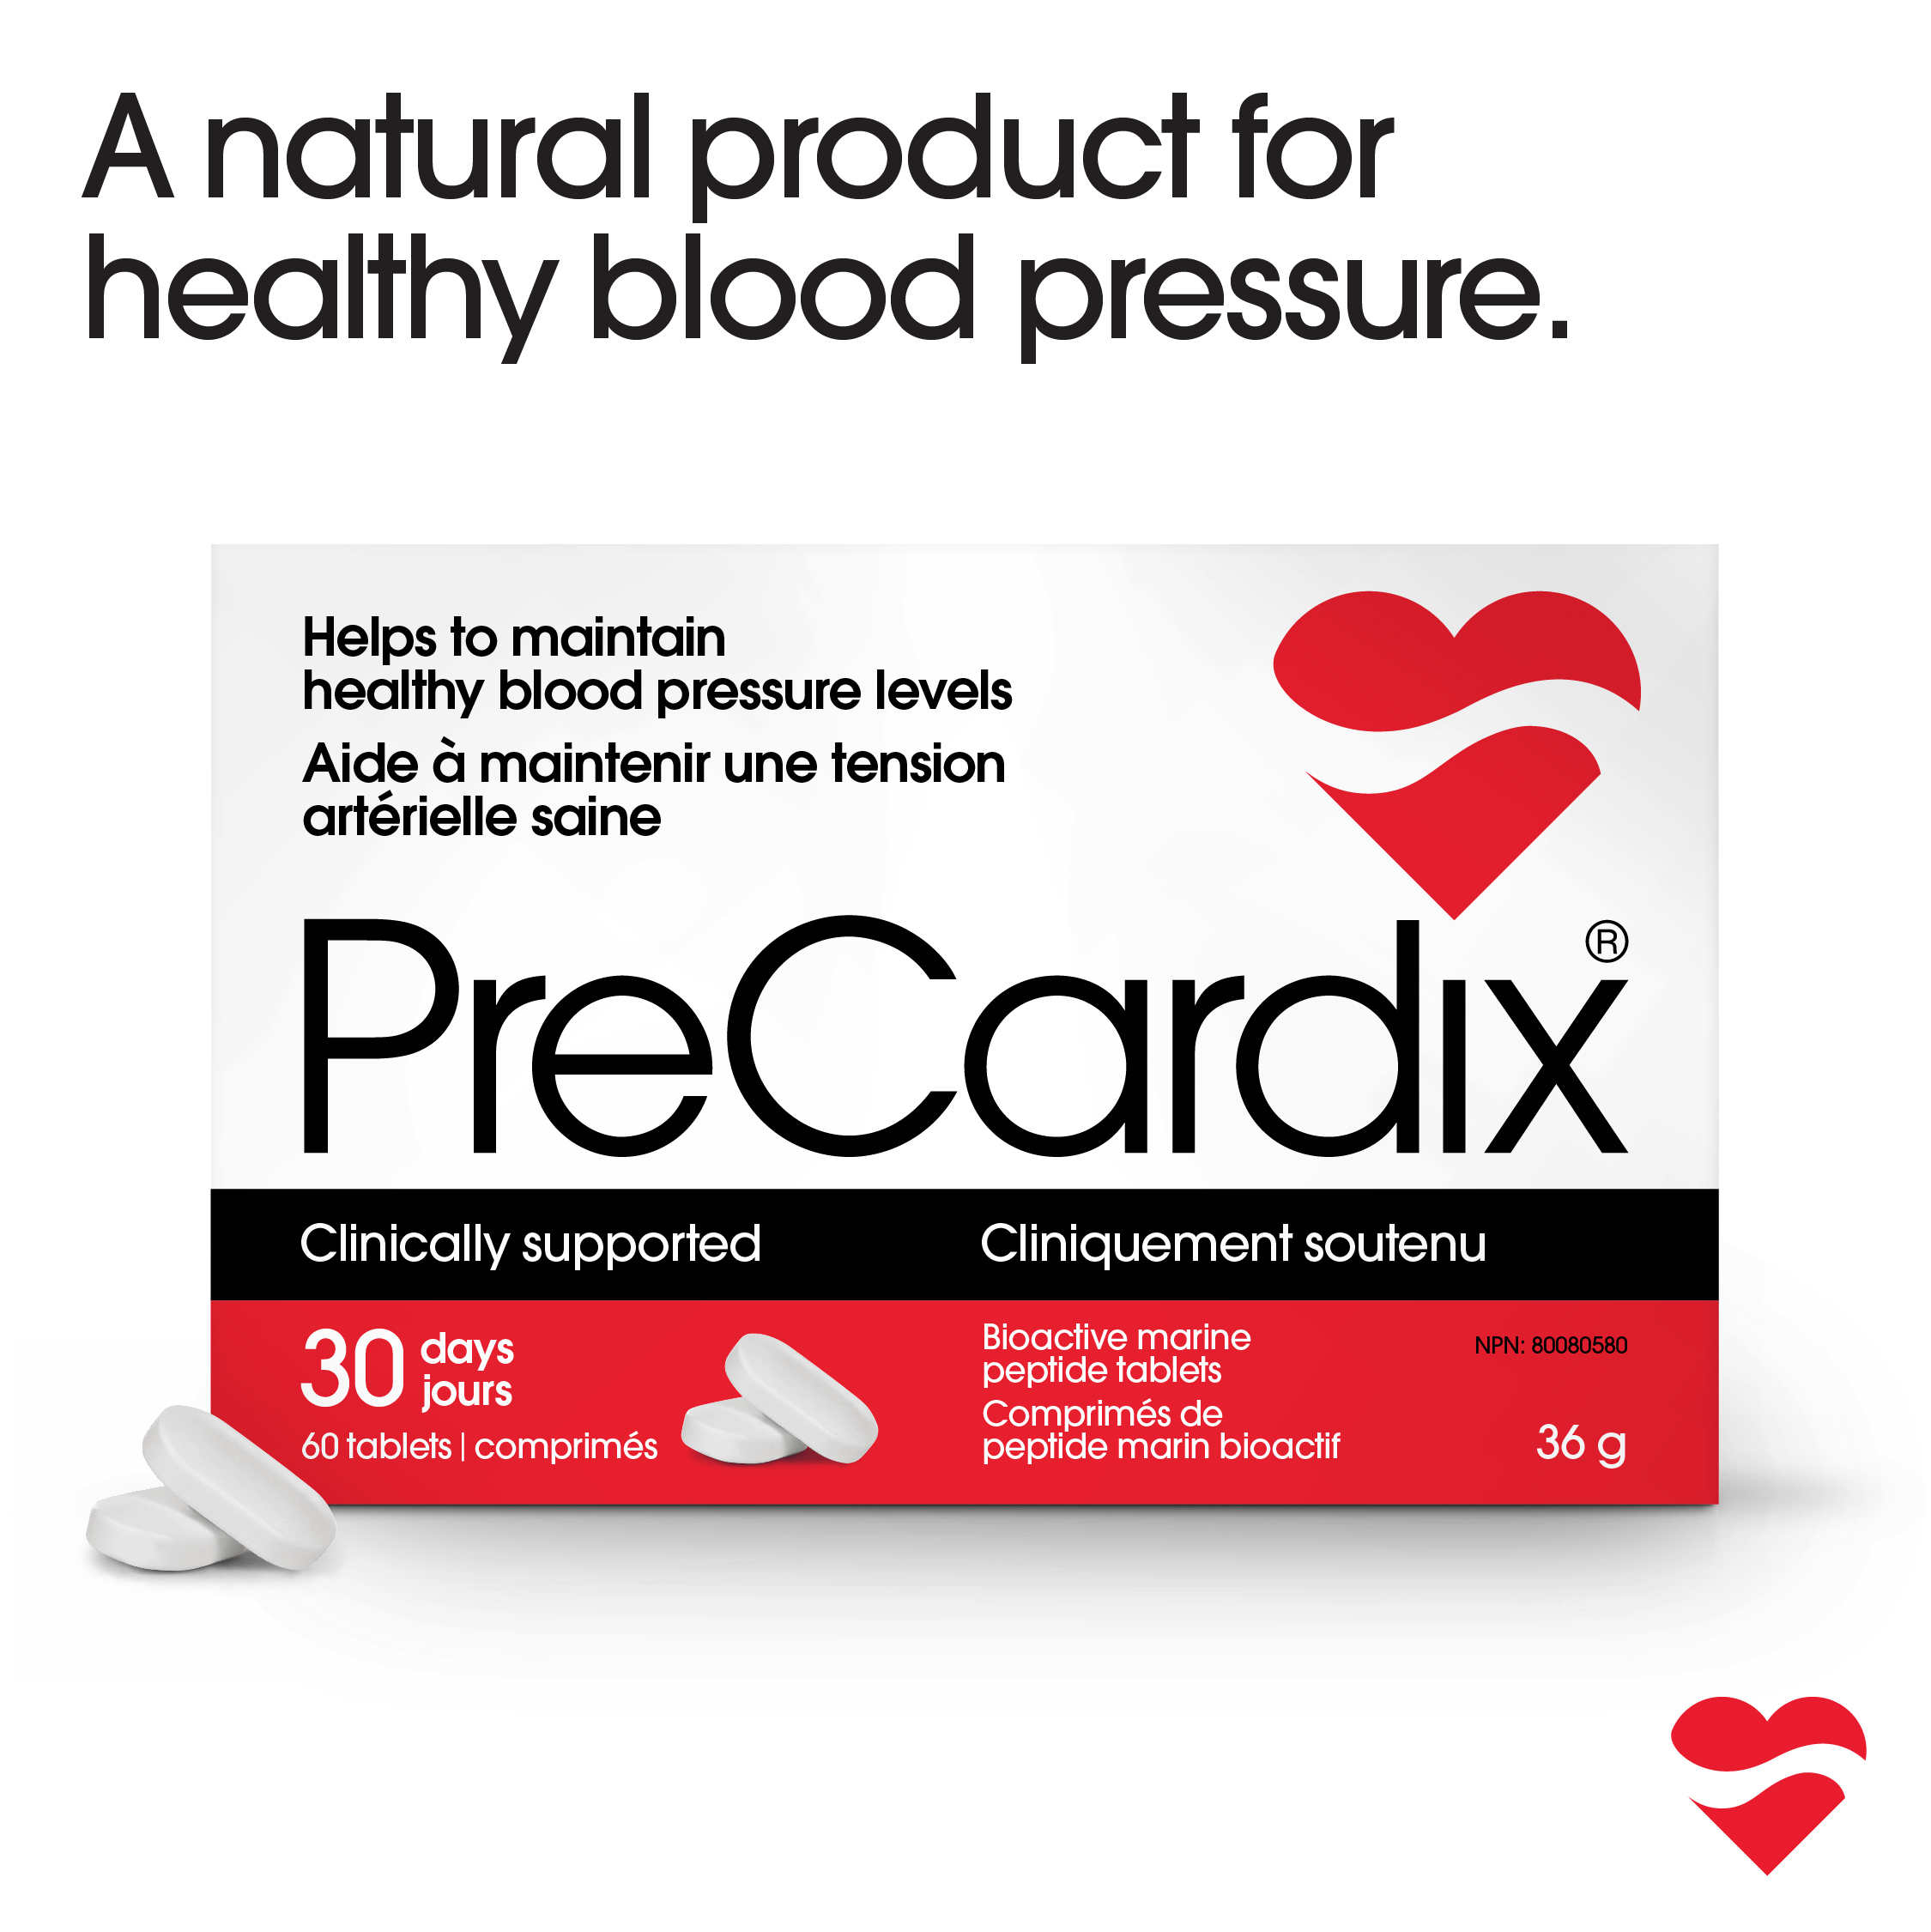 PreCardix natural product for healthy blood pressure